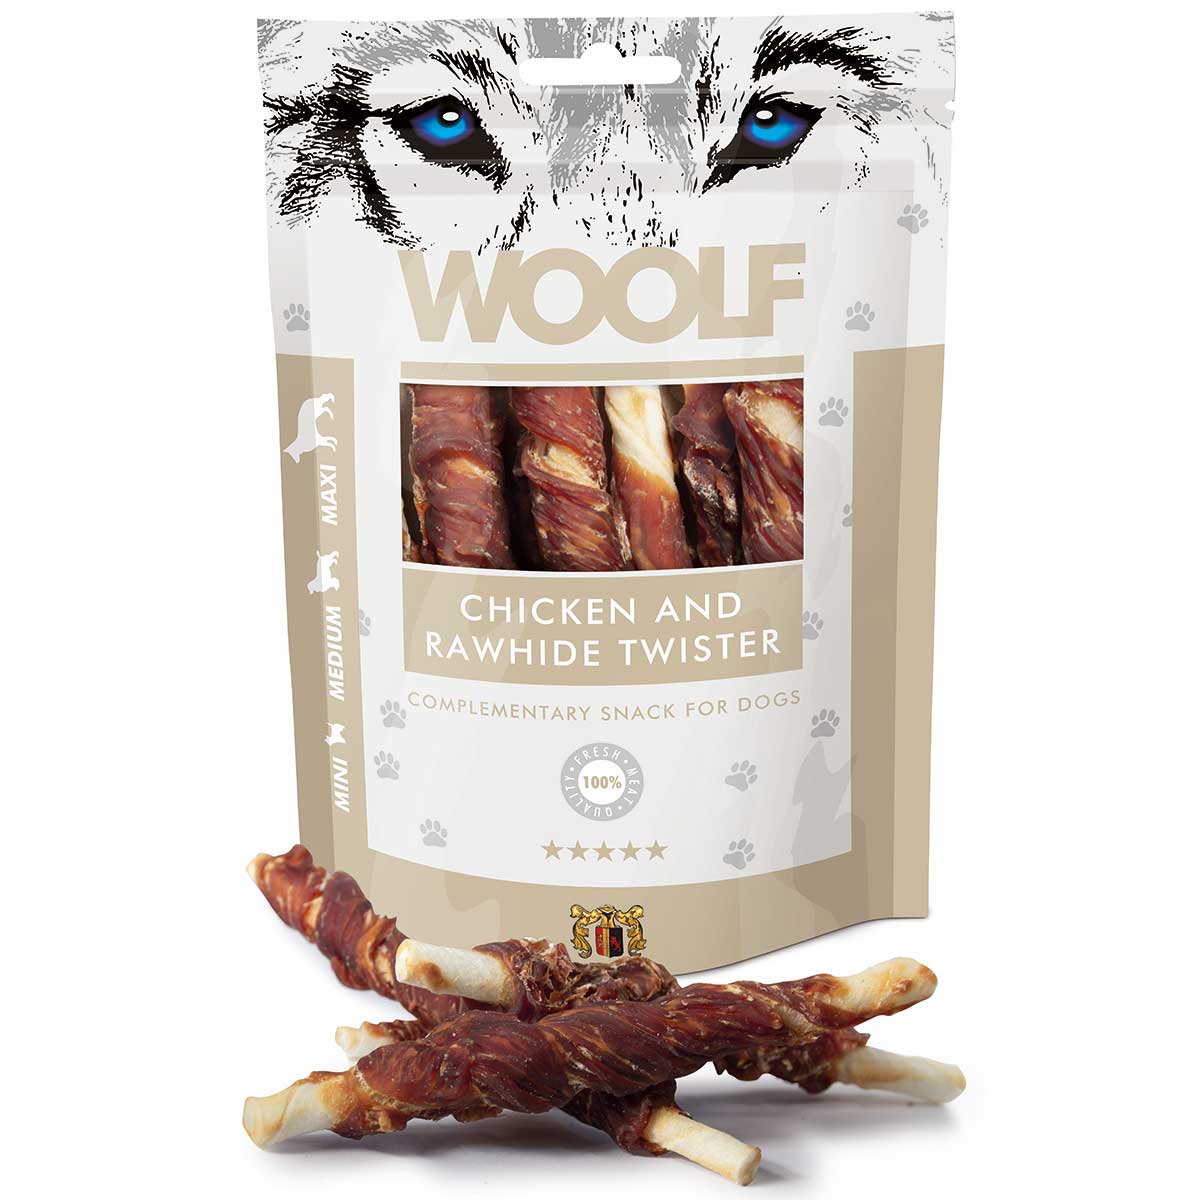 Woolf Dog treat chicken and rawhide twister